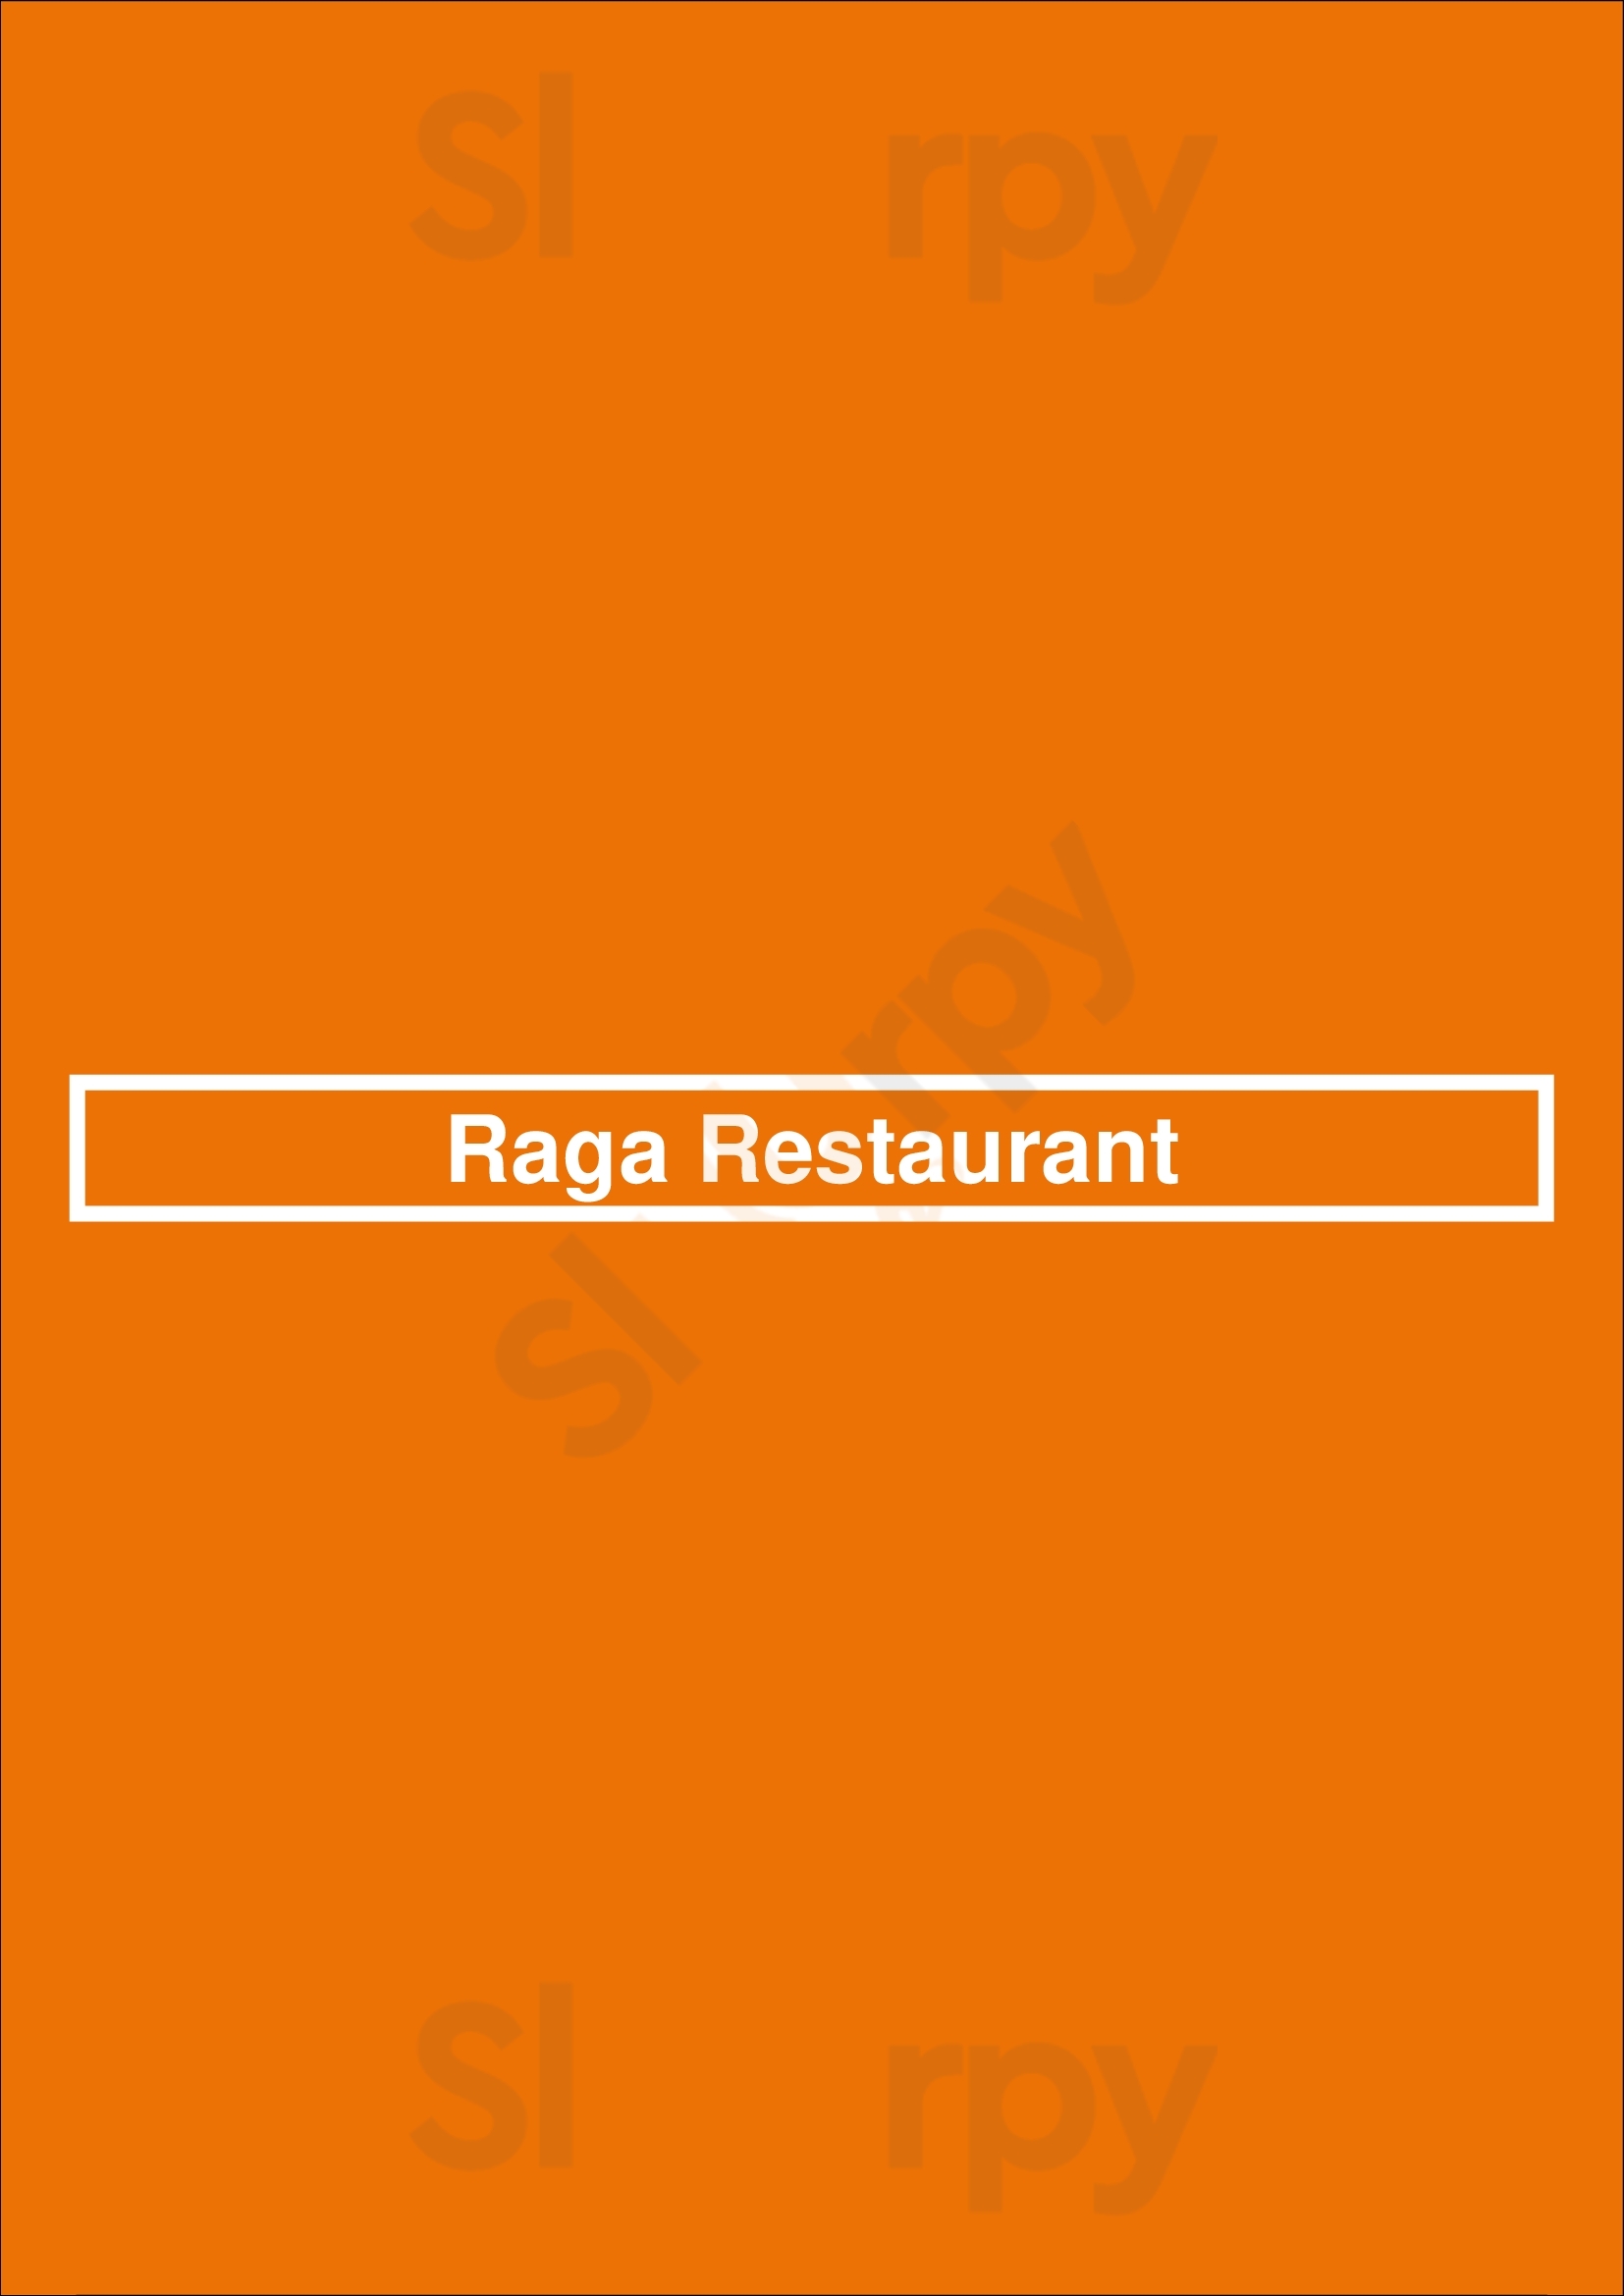 Raga Restaurant Vancouver Menu - 1